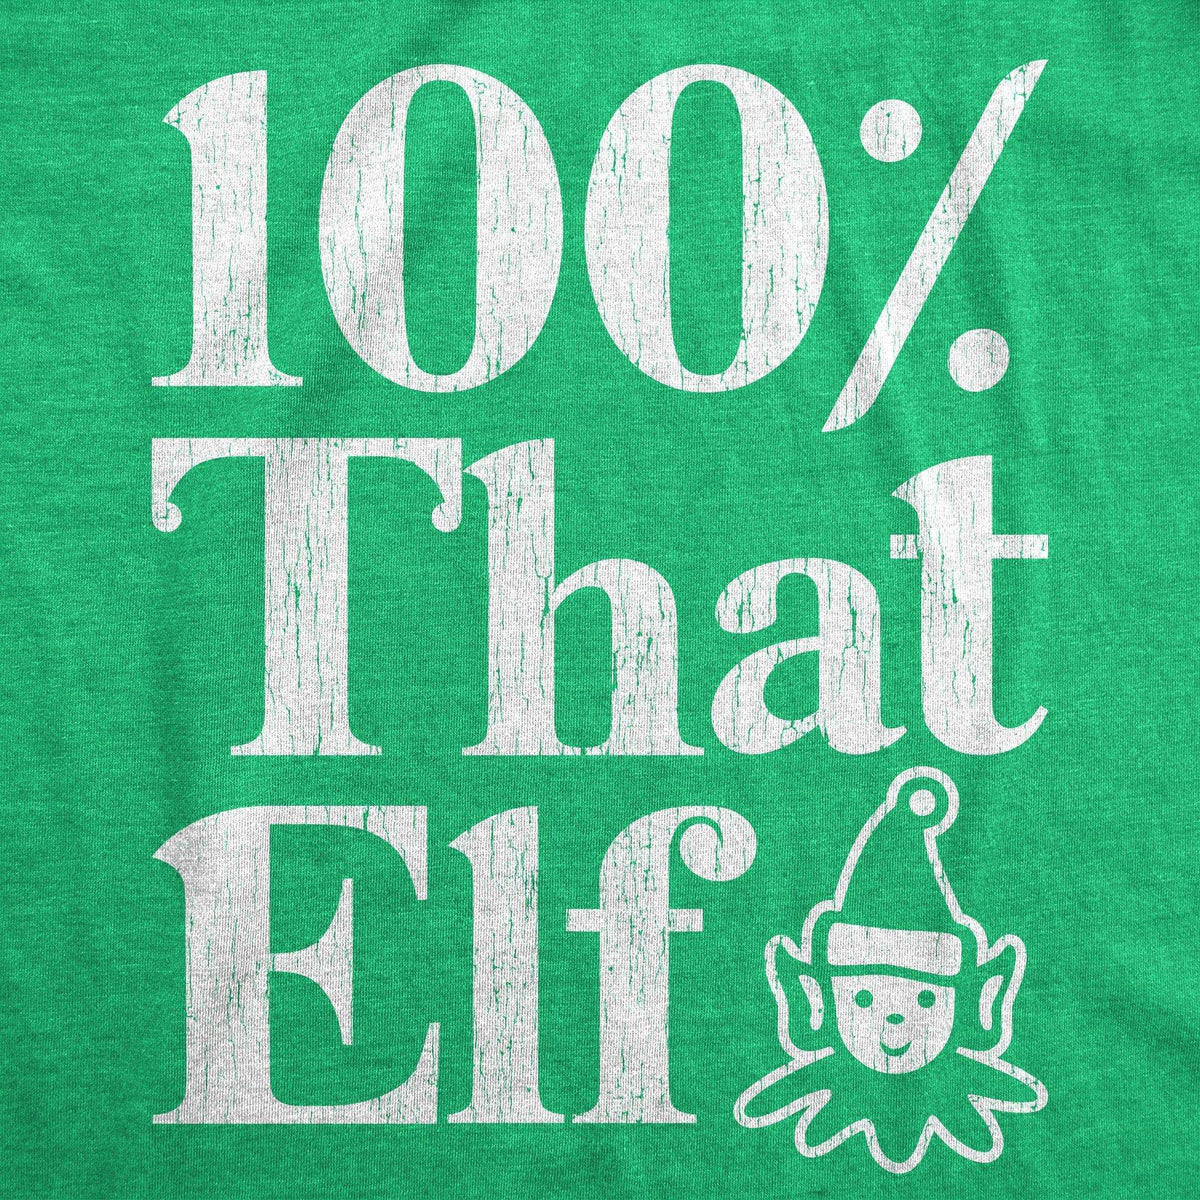 100% That Elf Men&#39;s Tshirt - Crazy Dog T-Shirts